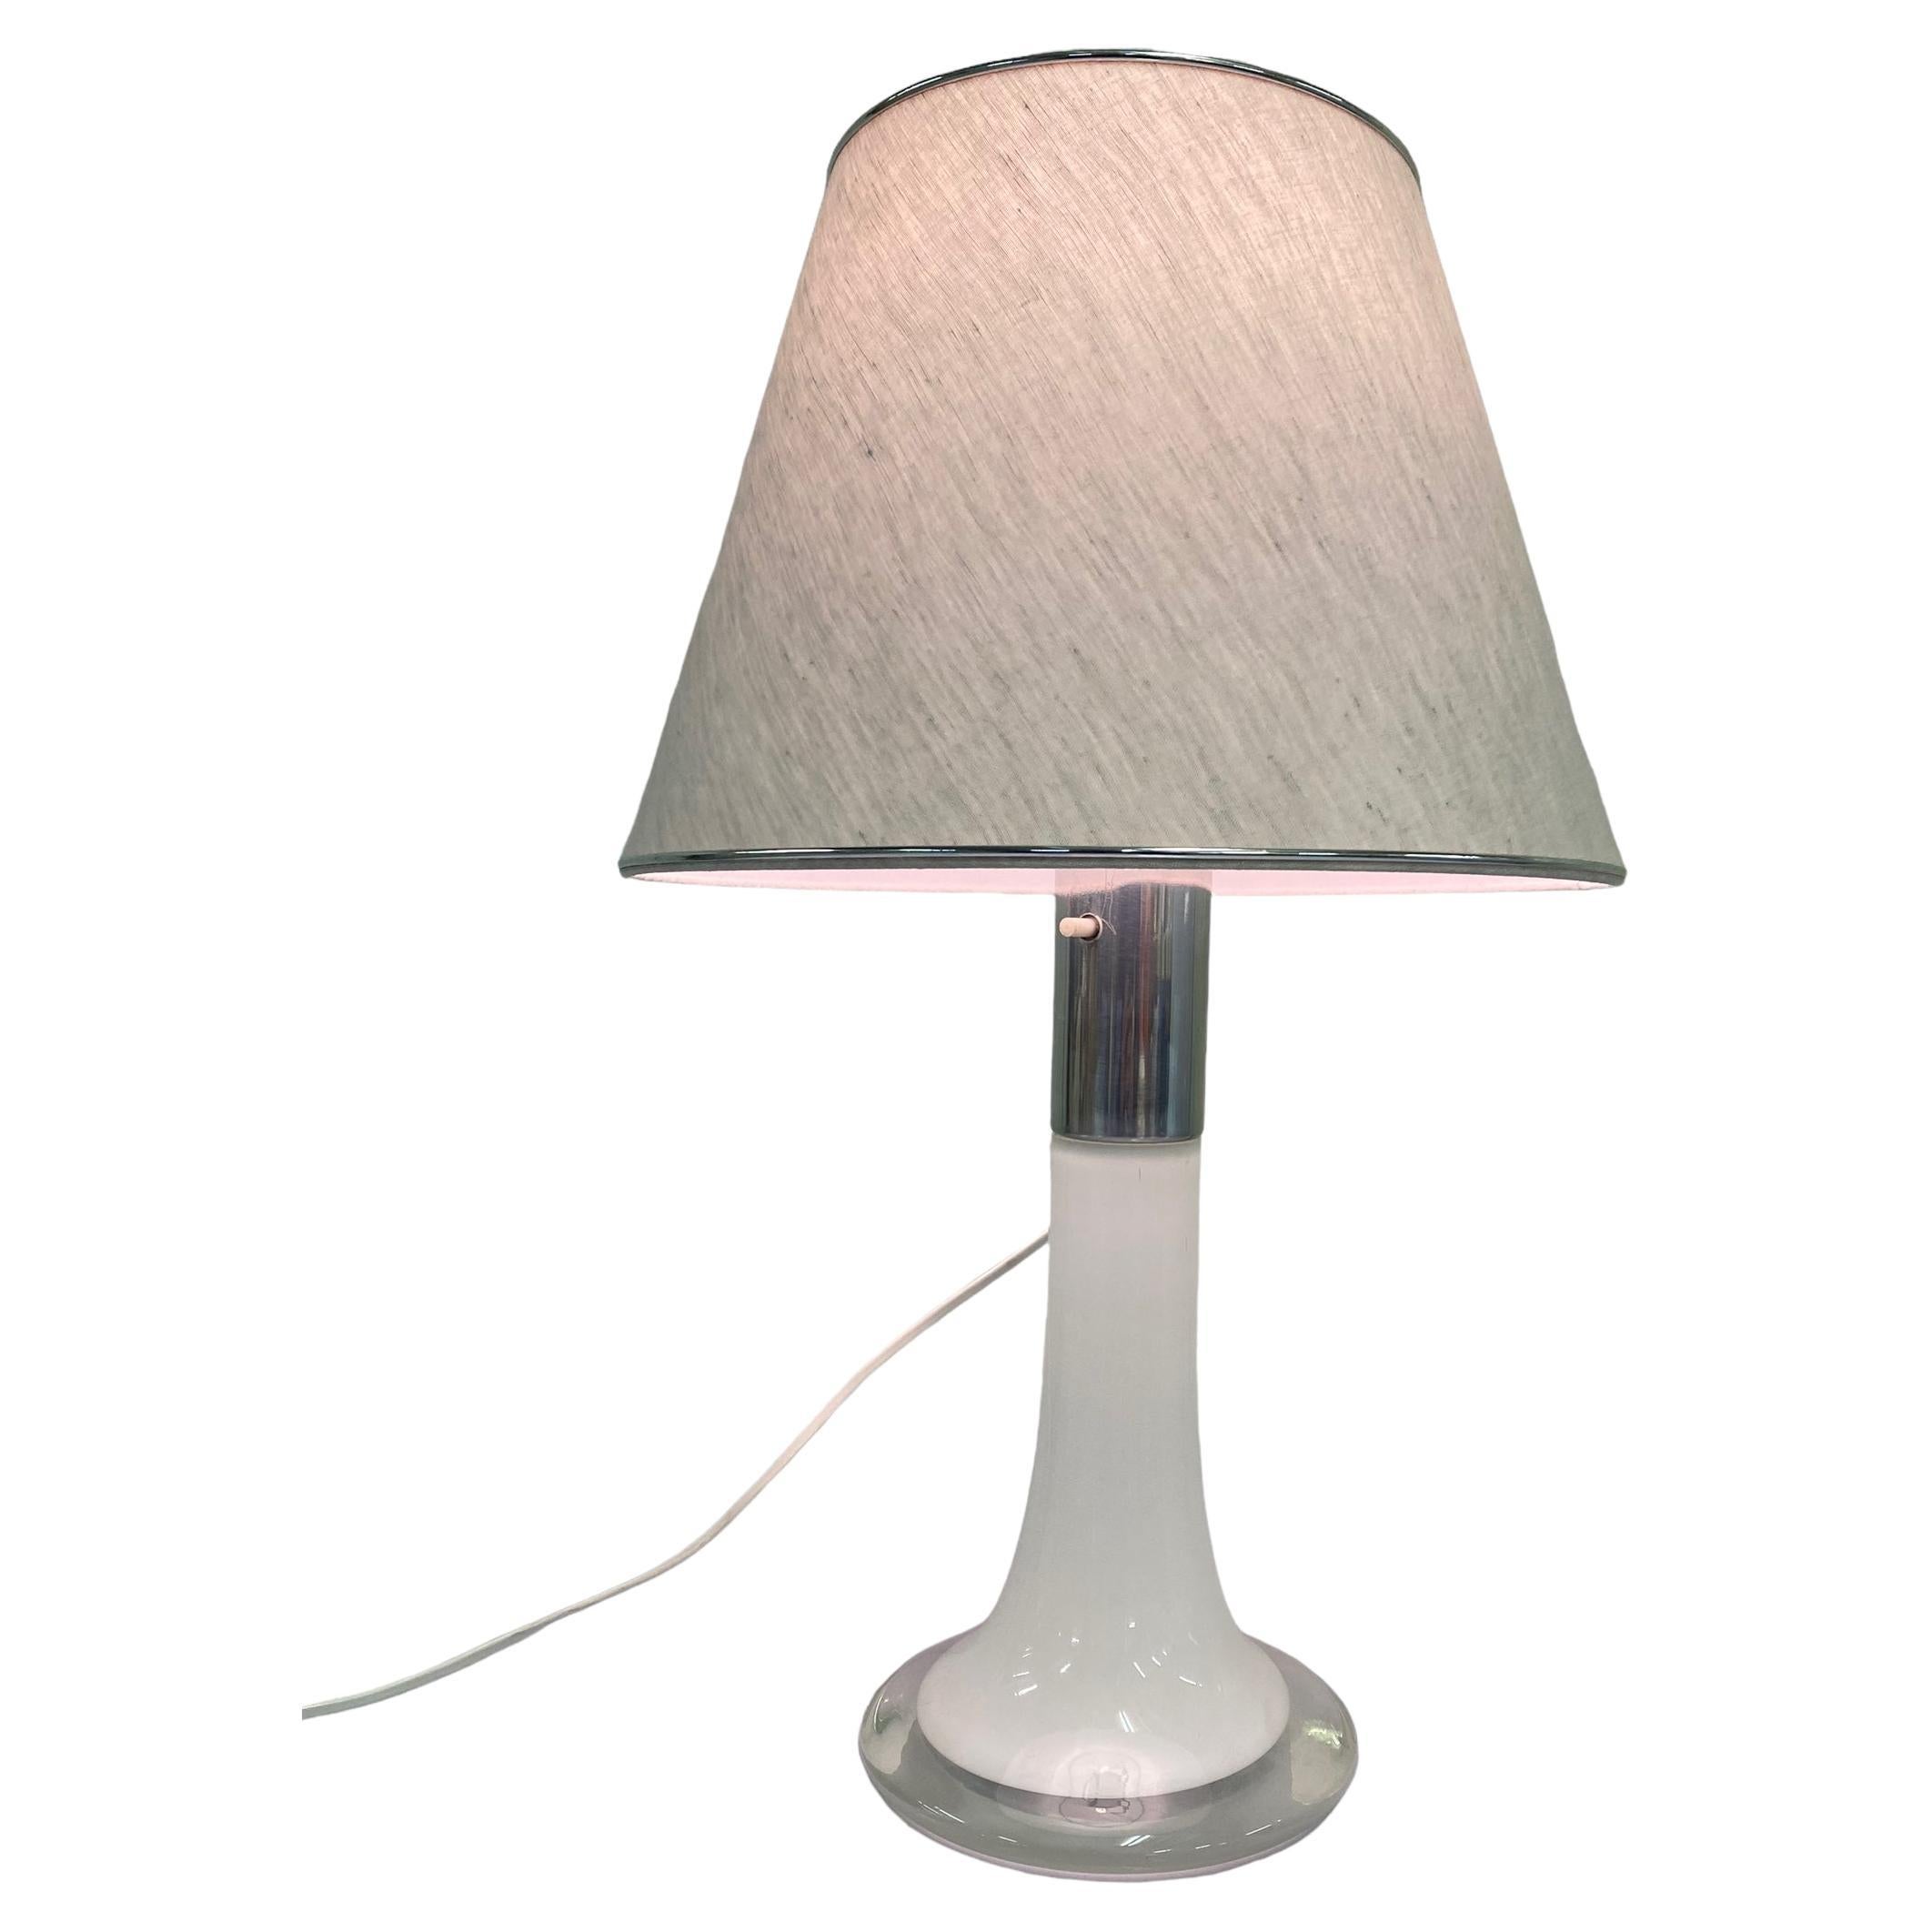 Lisa Johansson Pape Table Lamp Model 46-017, Orno 1960s For Sale